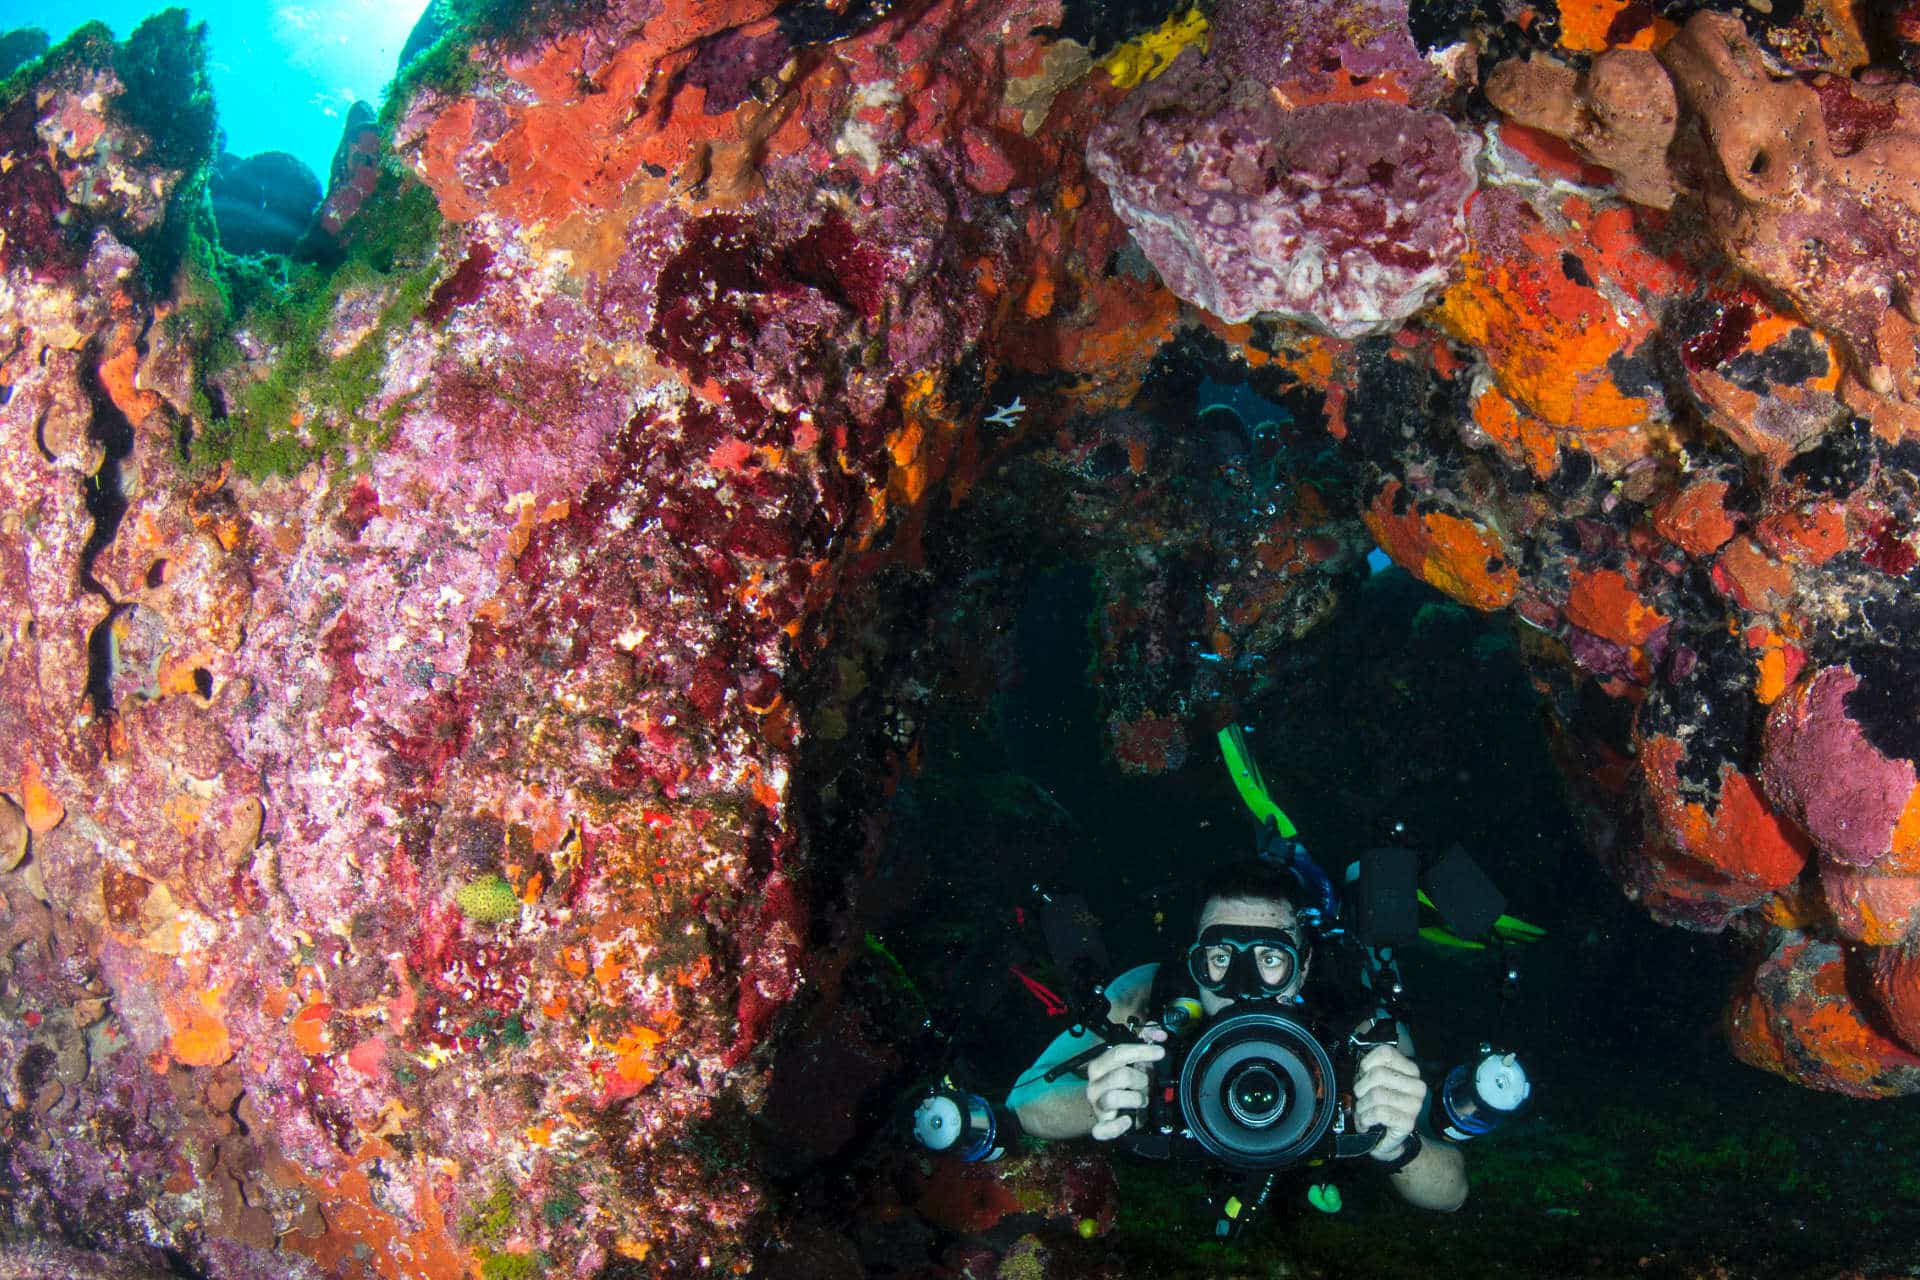 Scuba diver with underwater camera under rock